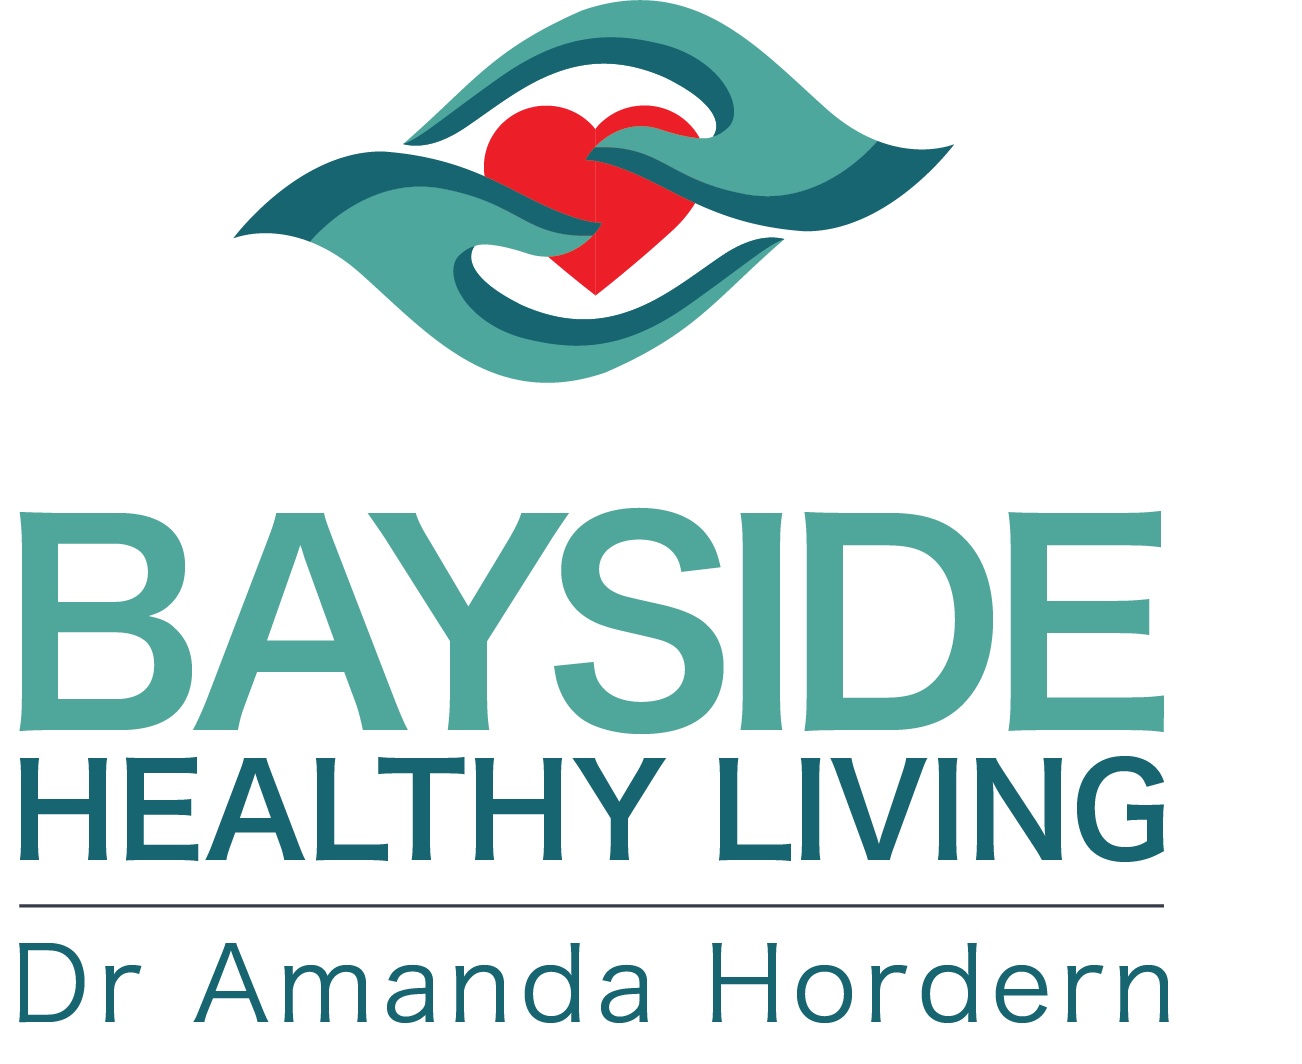 Bayside Healthy Living